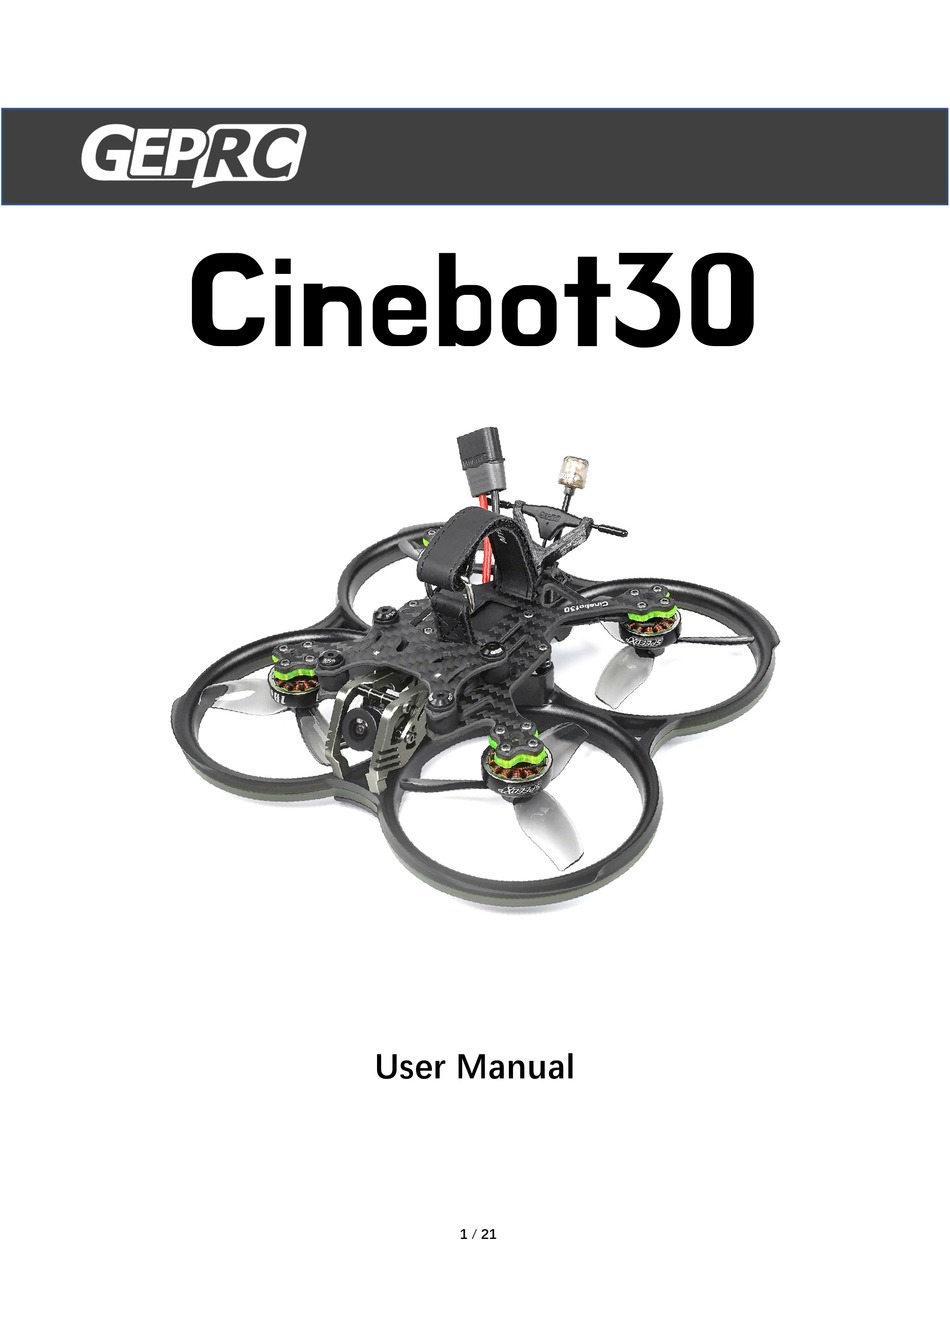 Cinebot. User manual квадрокоптер 1.0 CN. GEPRC cinebot25. Cinebot 30